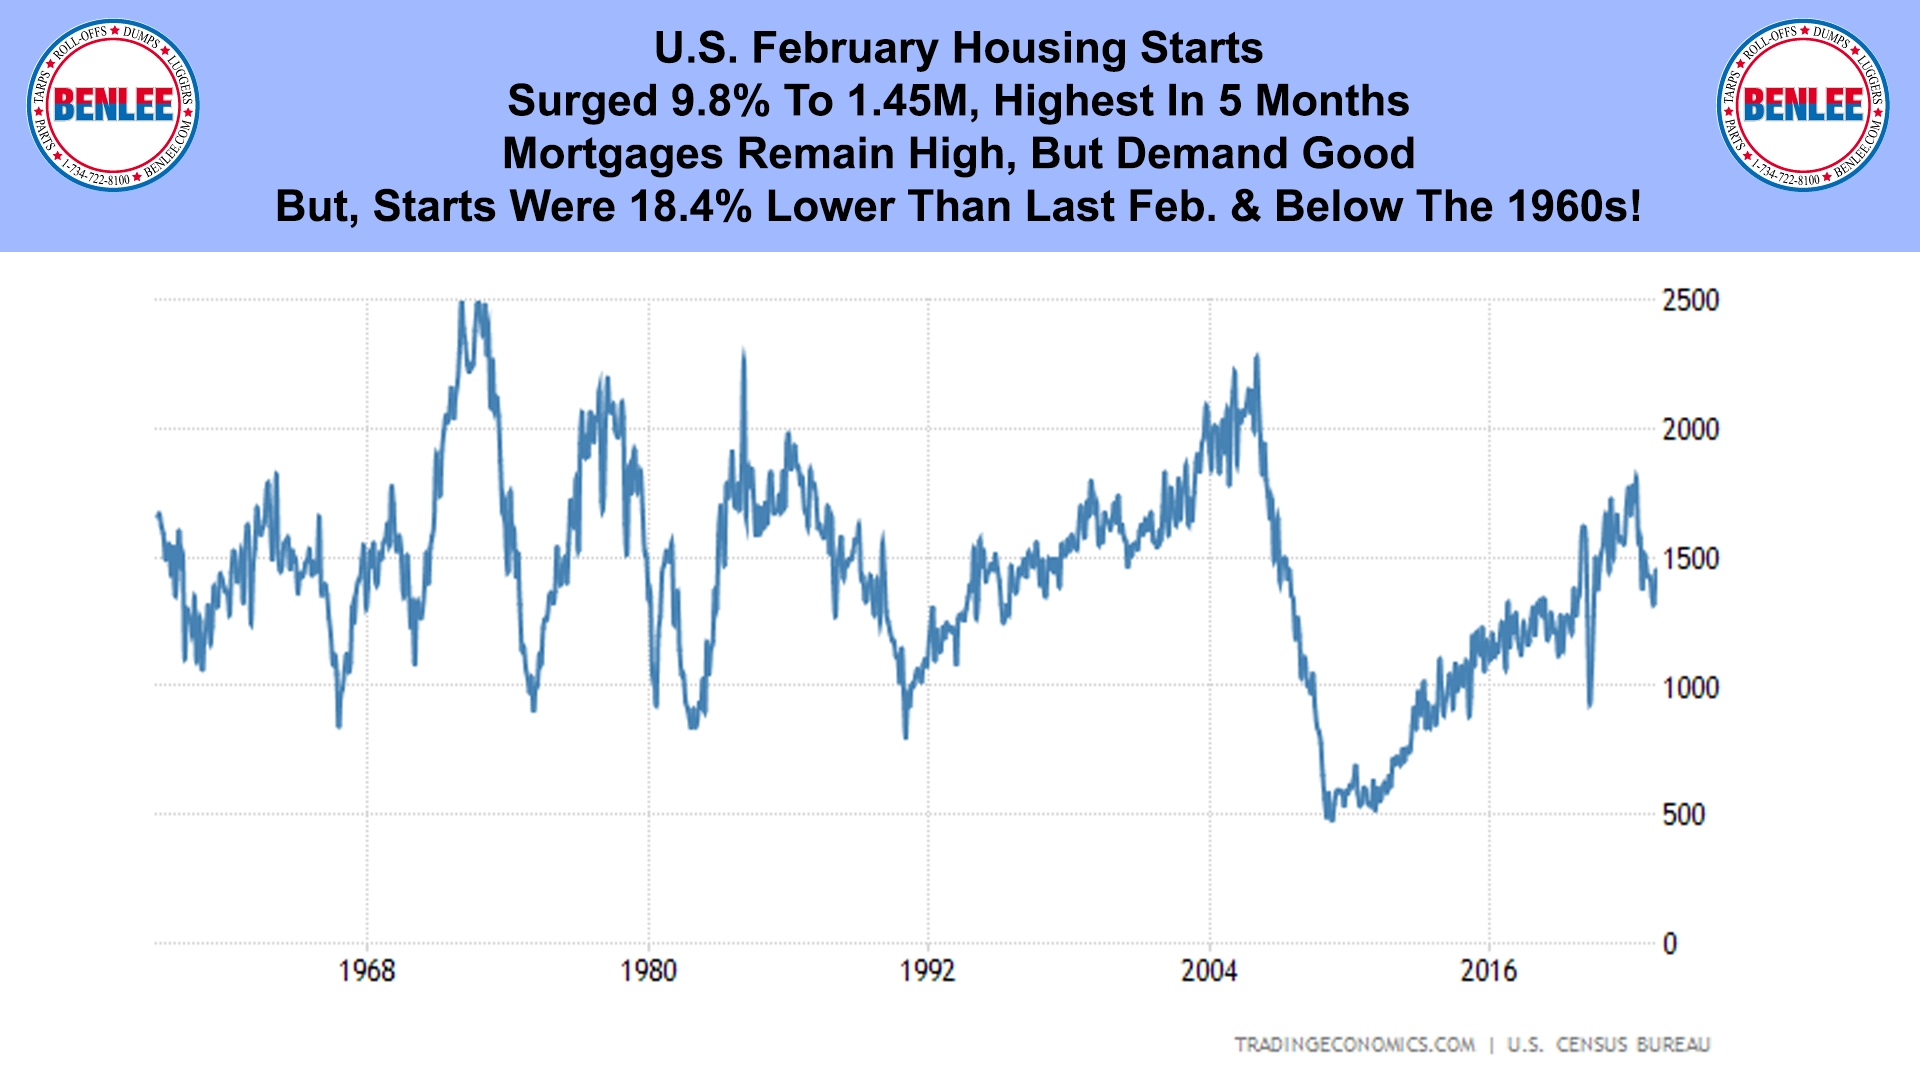 U.S. February Housing Starts